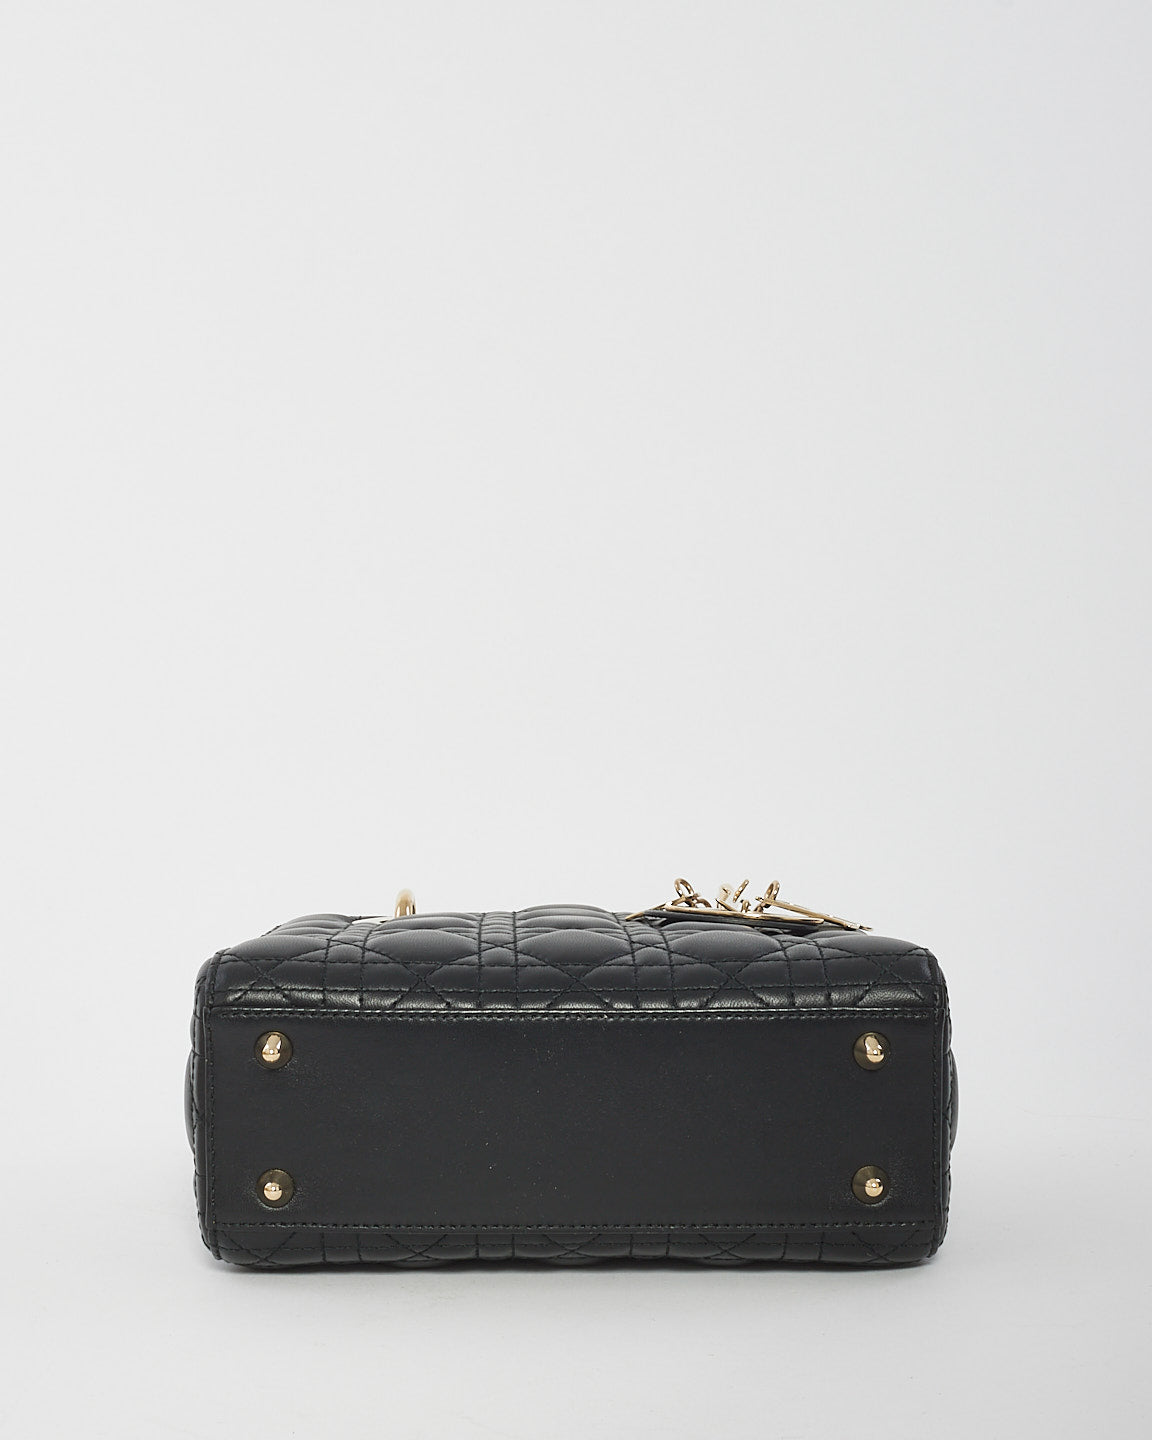 Dior Black Lambskin Leather Small Lady Dior Bag